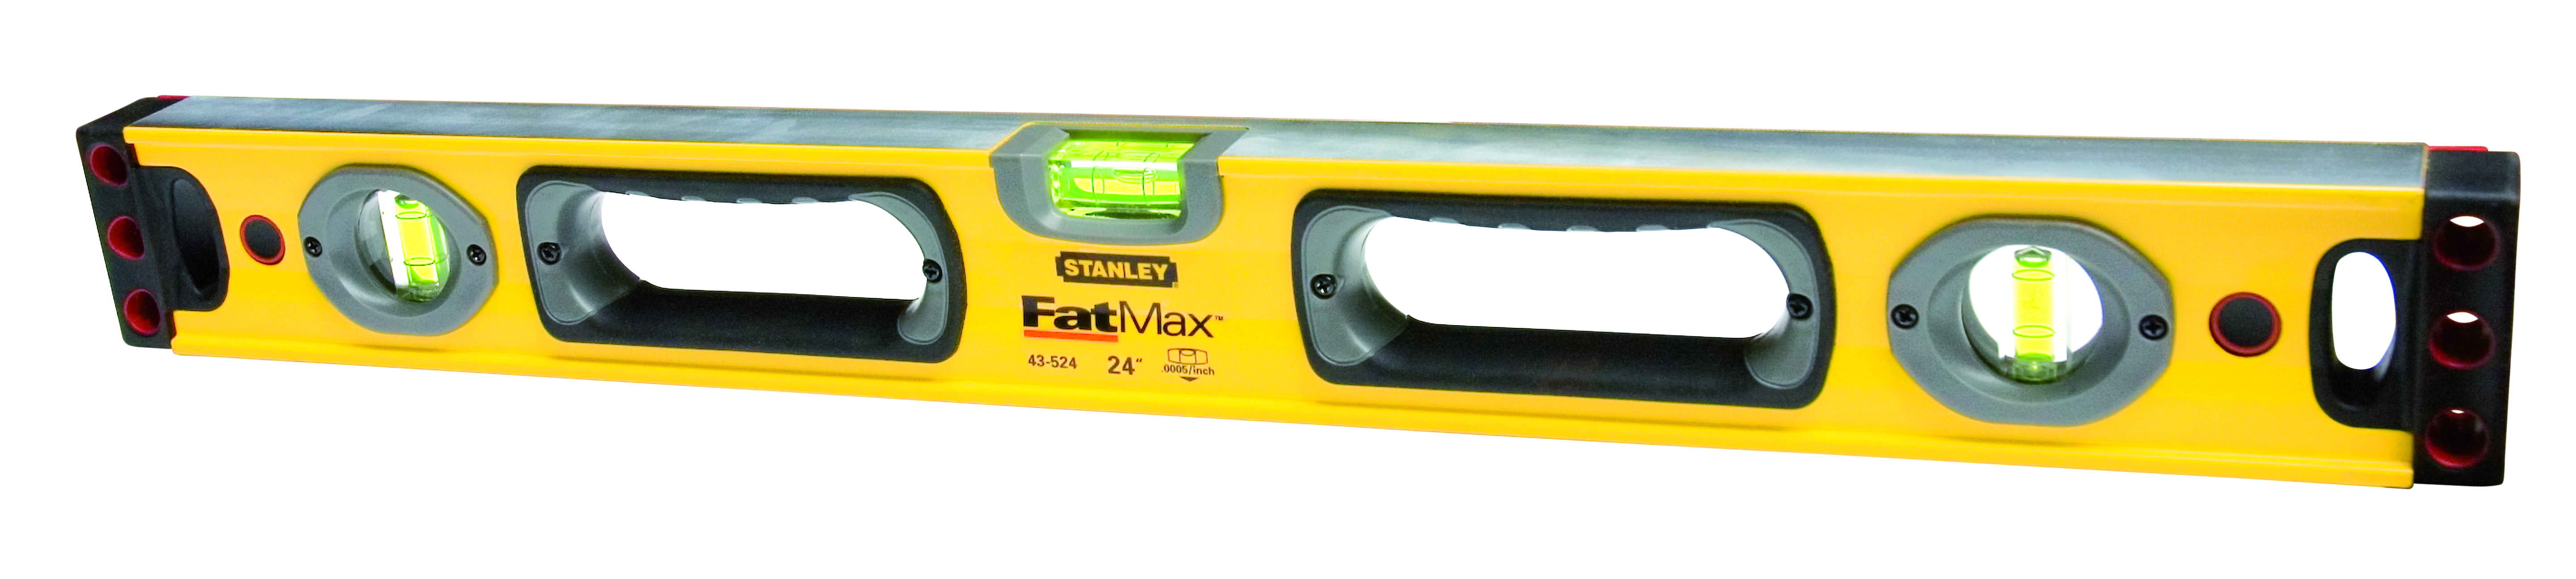 Stanley Уровень FatMax II 600 мм x 3 Капсулы Stanley 1-43-524